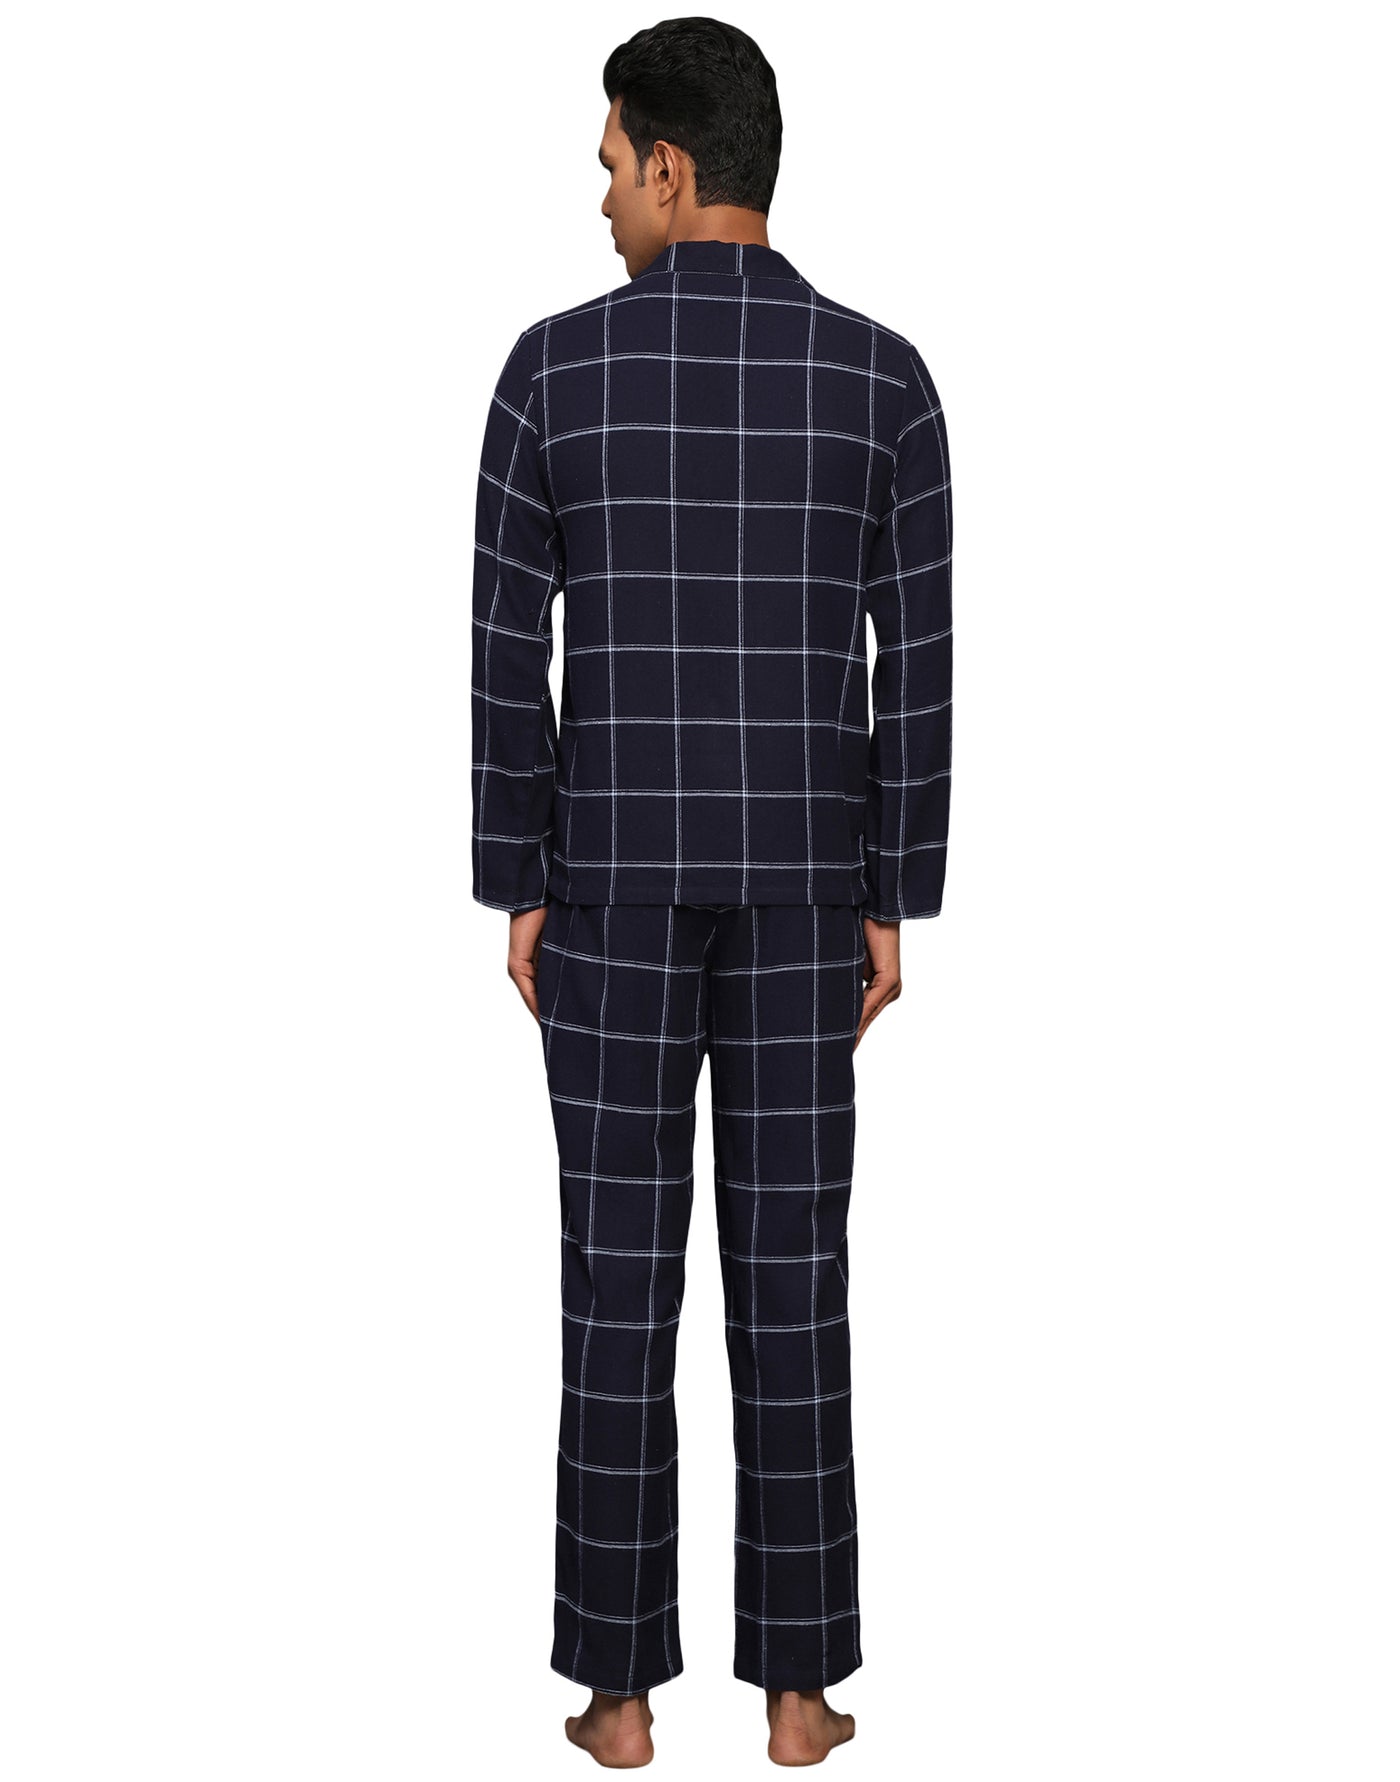 Pyjama Set for Men-Blue Window Checks